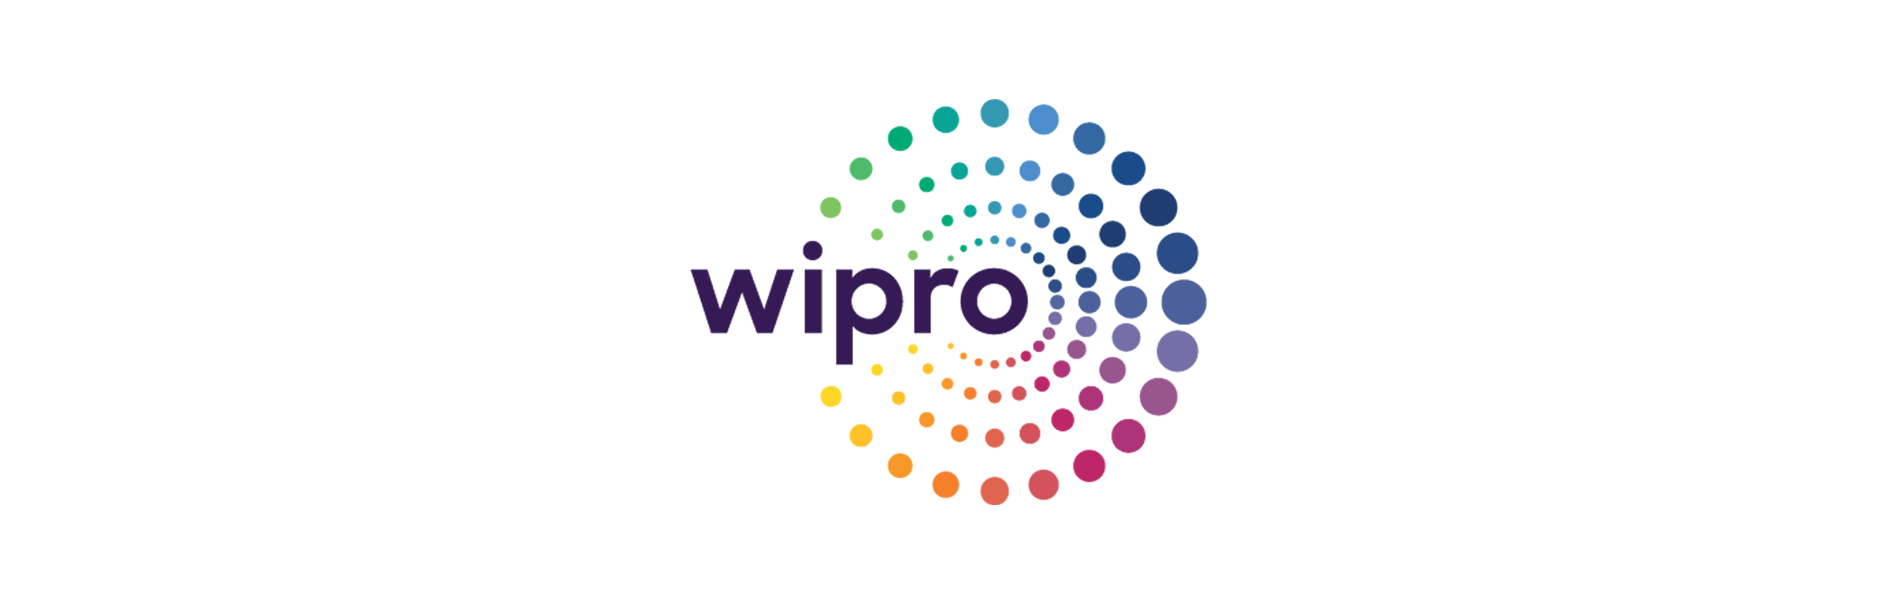 How logistics providers unlock value across supply chain - Wipro